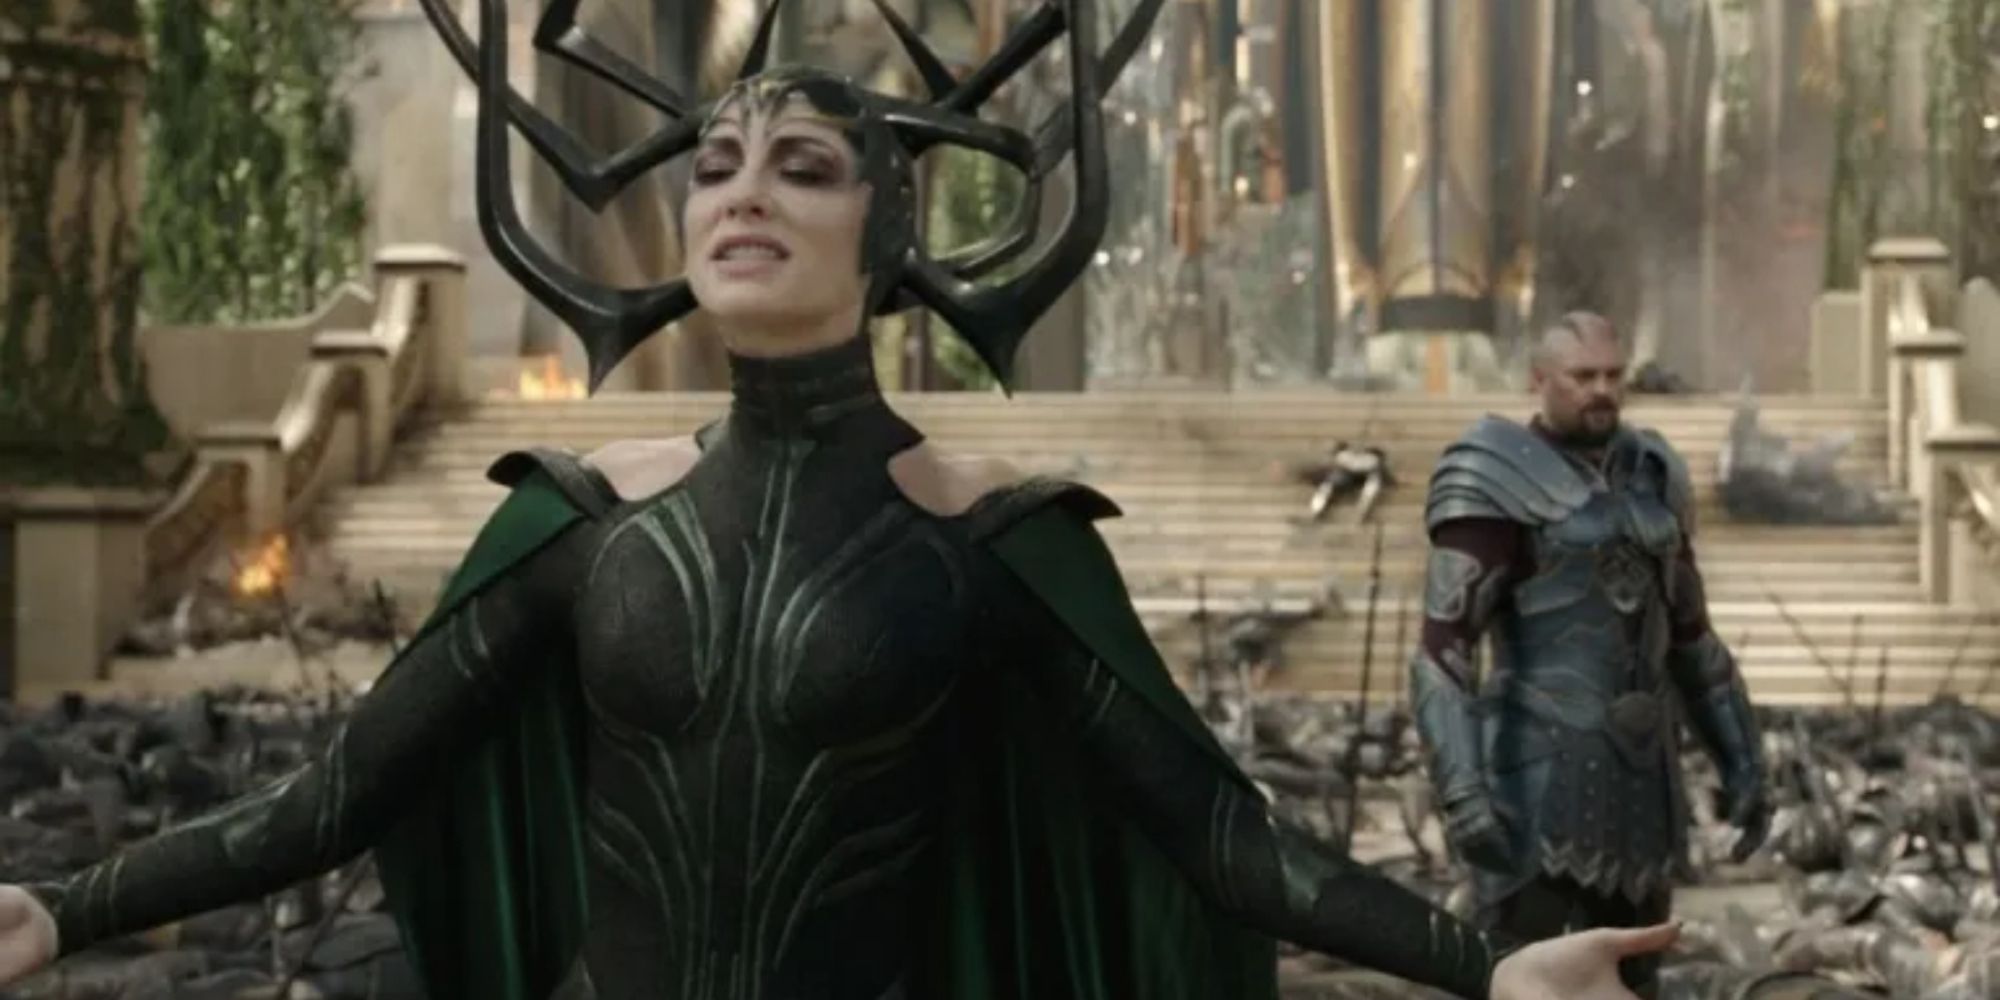 Cate Blanchett as Hela in Thor: Ragnarok 